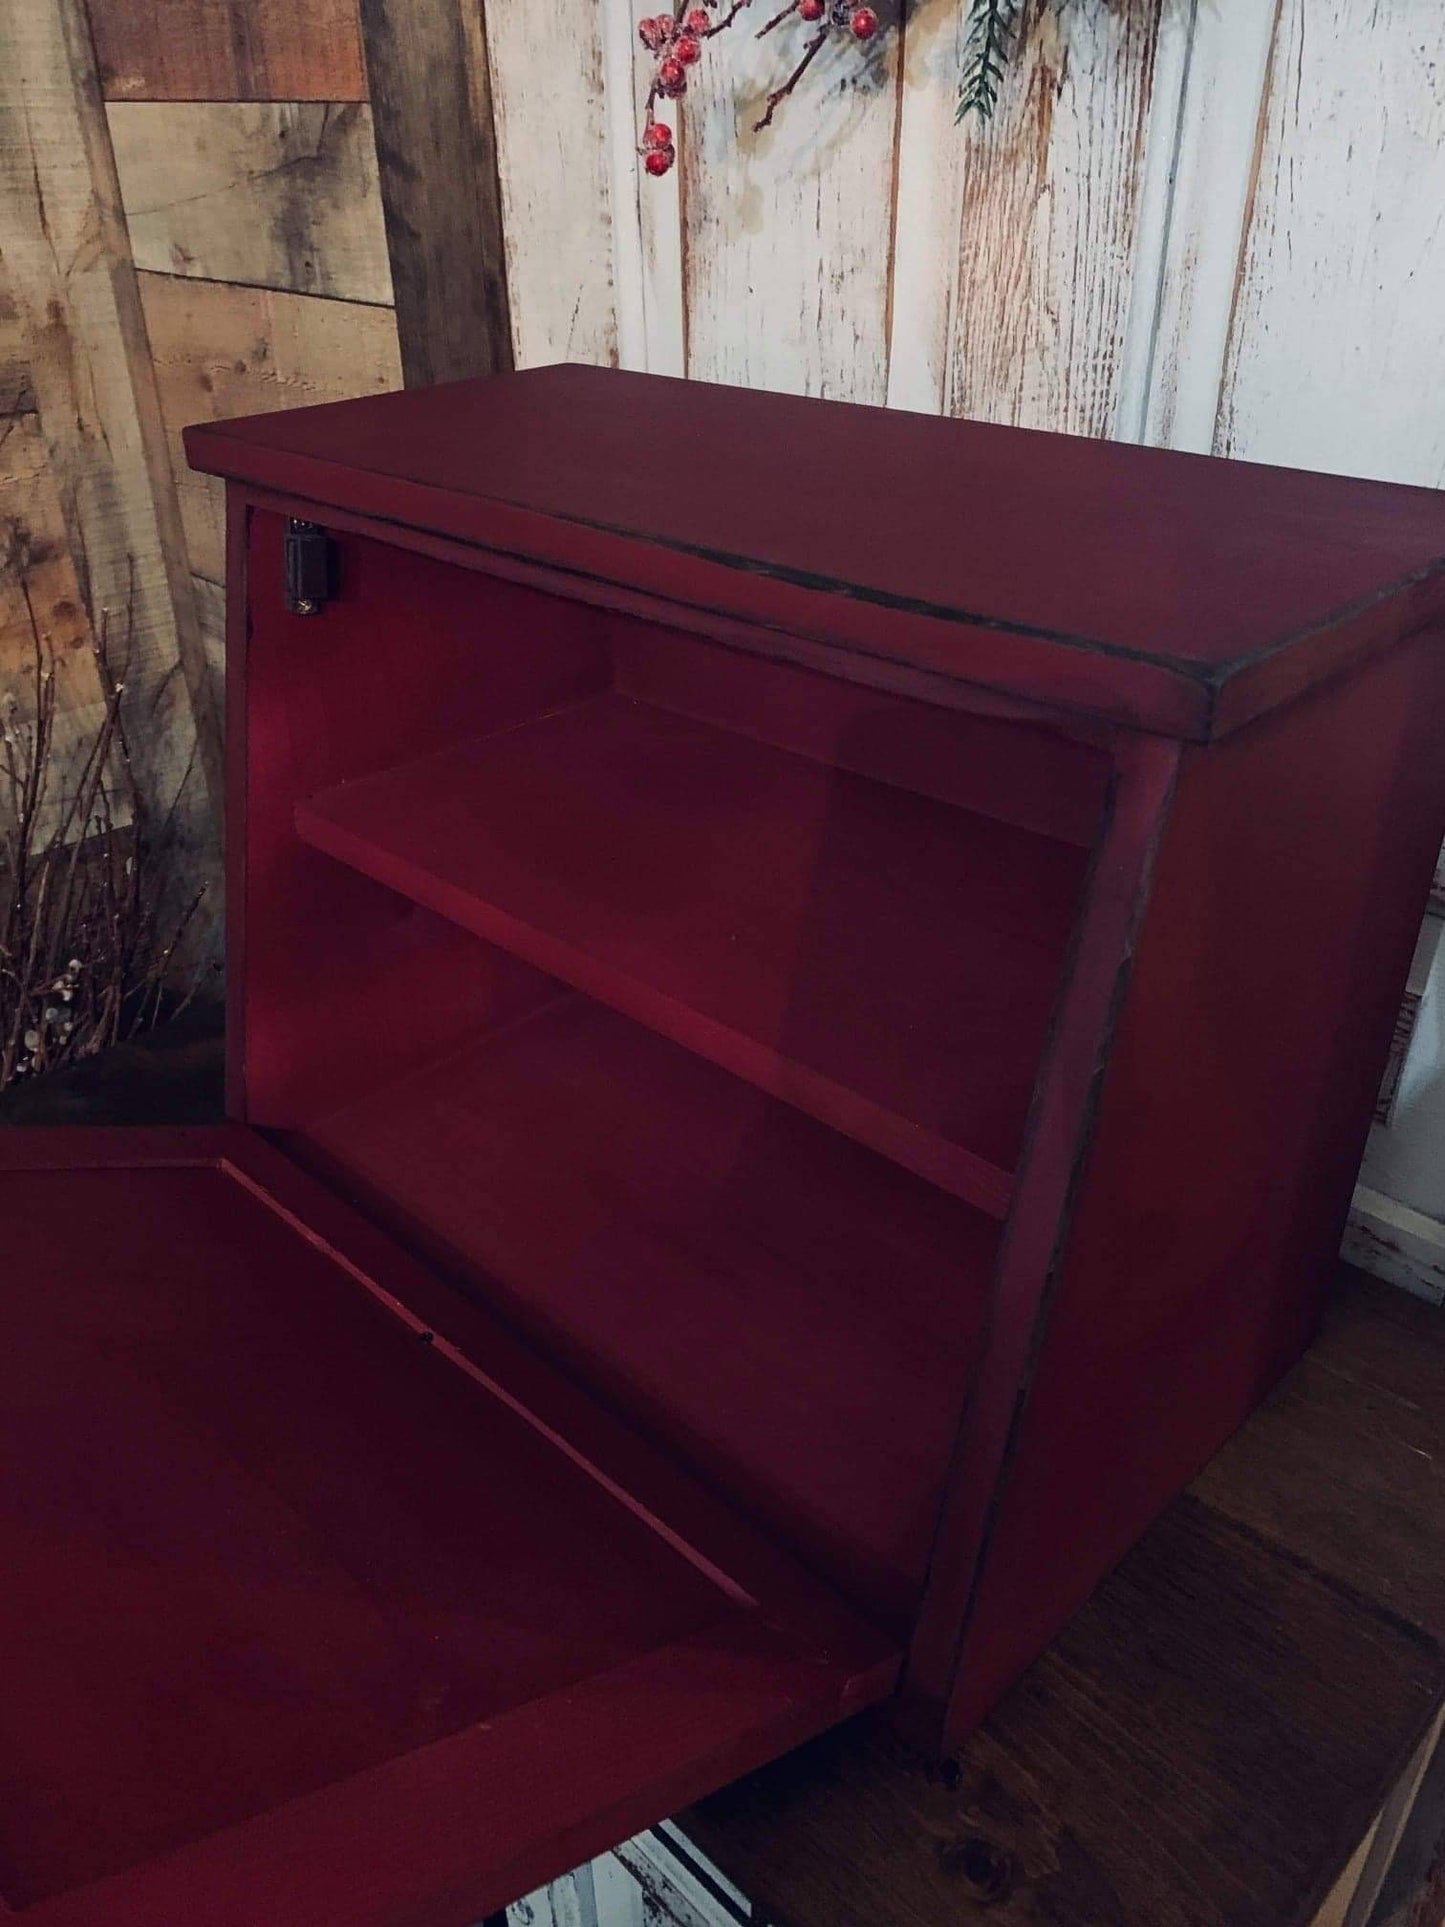 Rustic breadbox  counter top storage